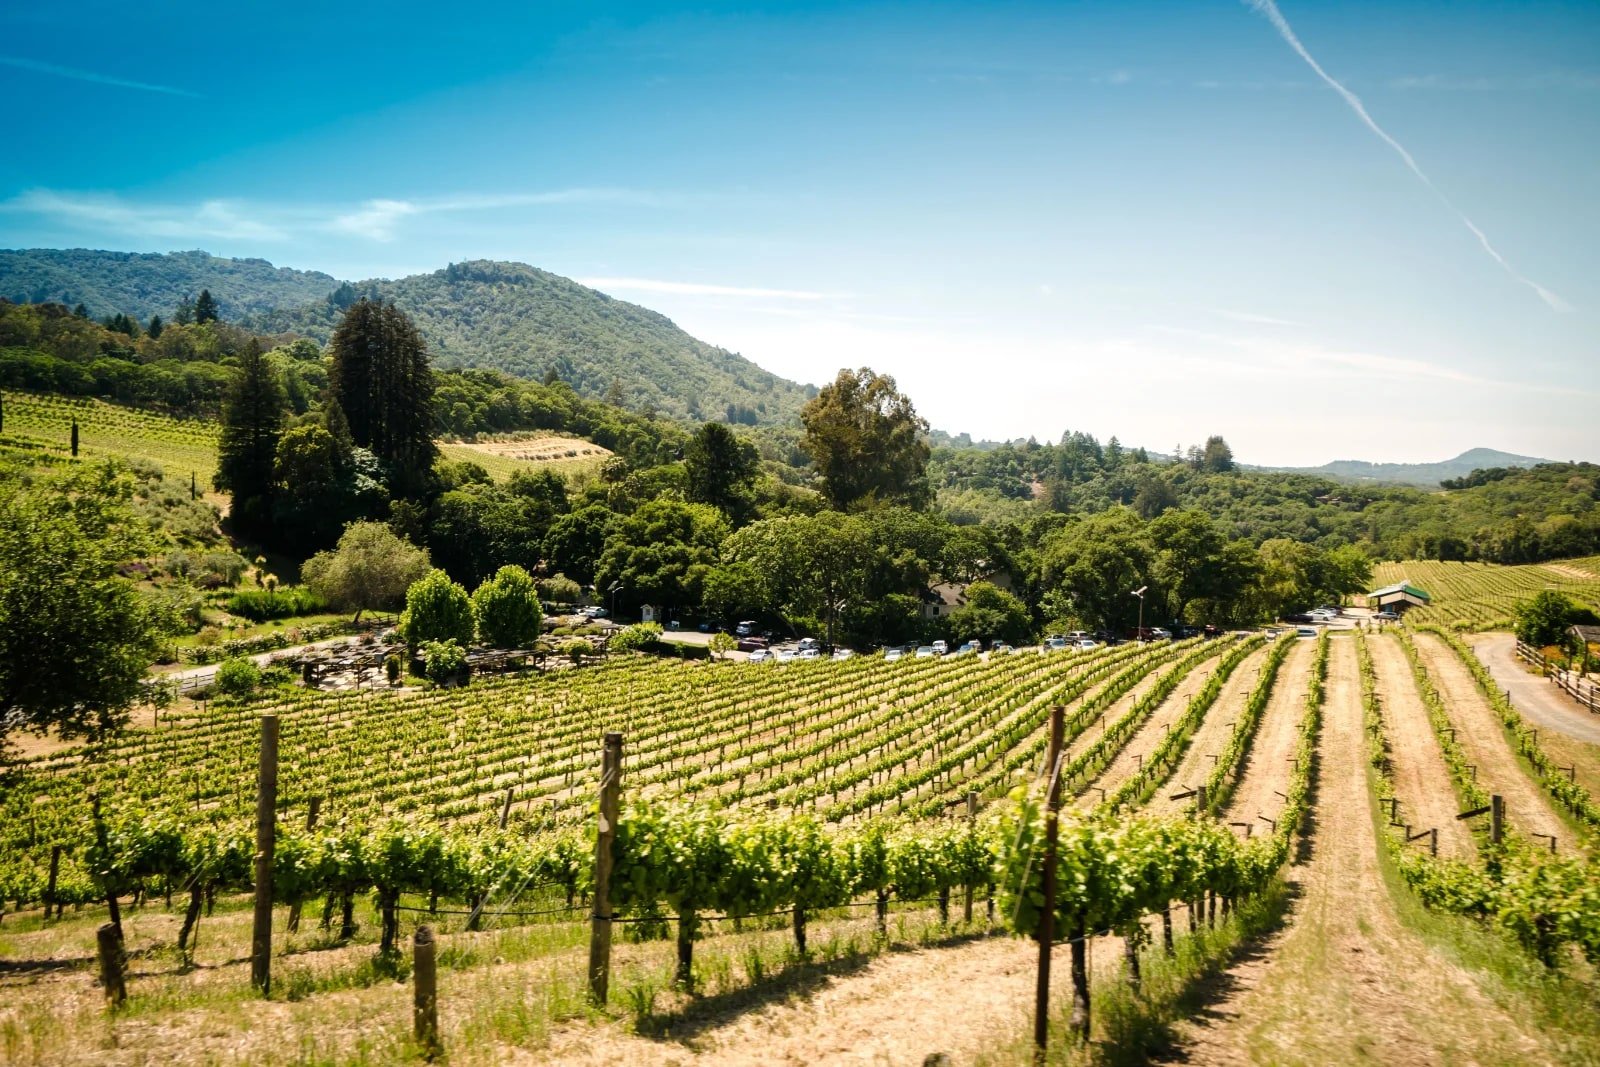 Los Gatos Winery and Vineyards